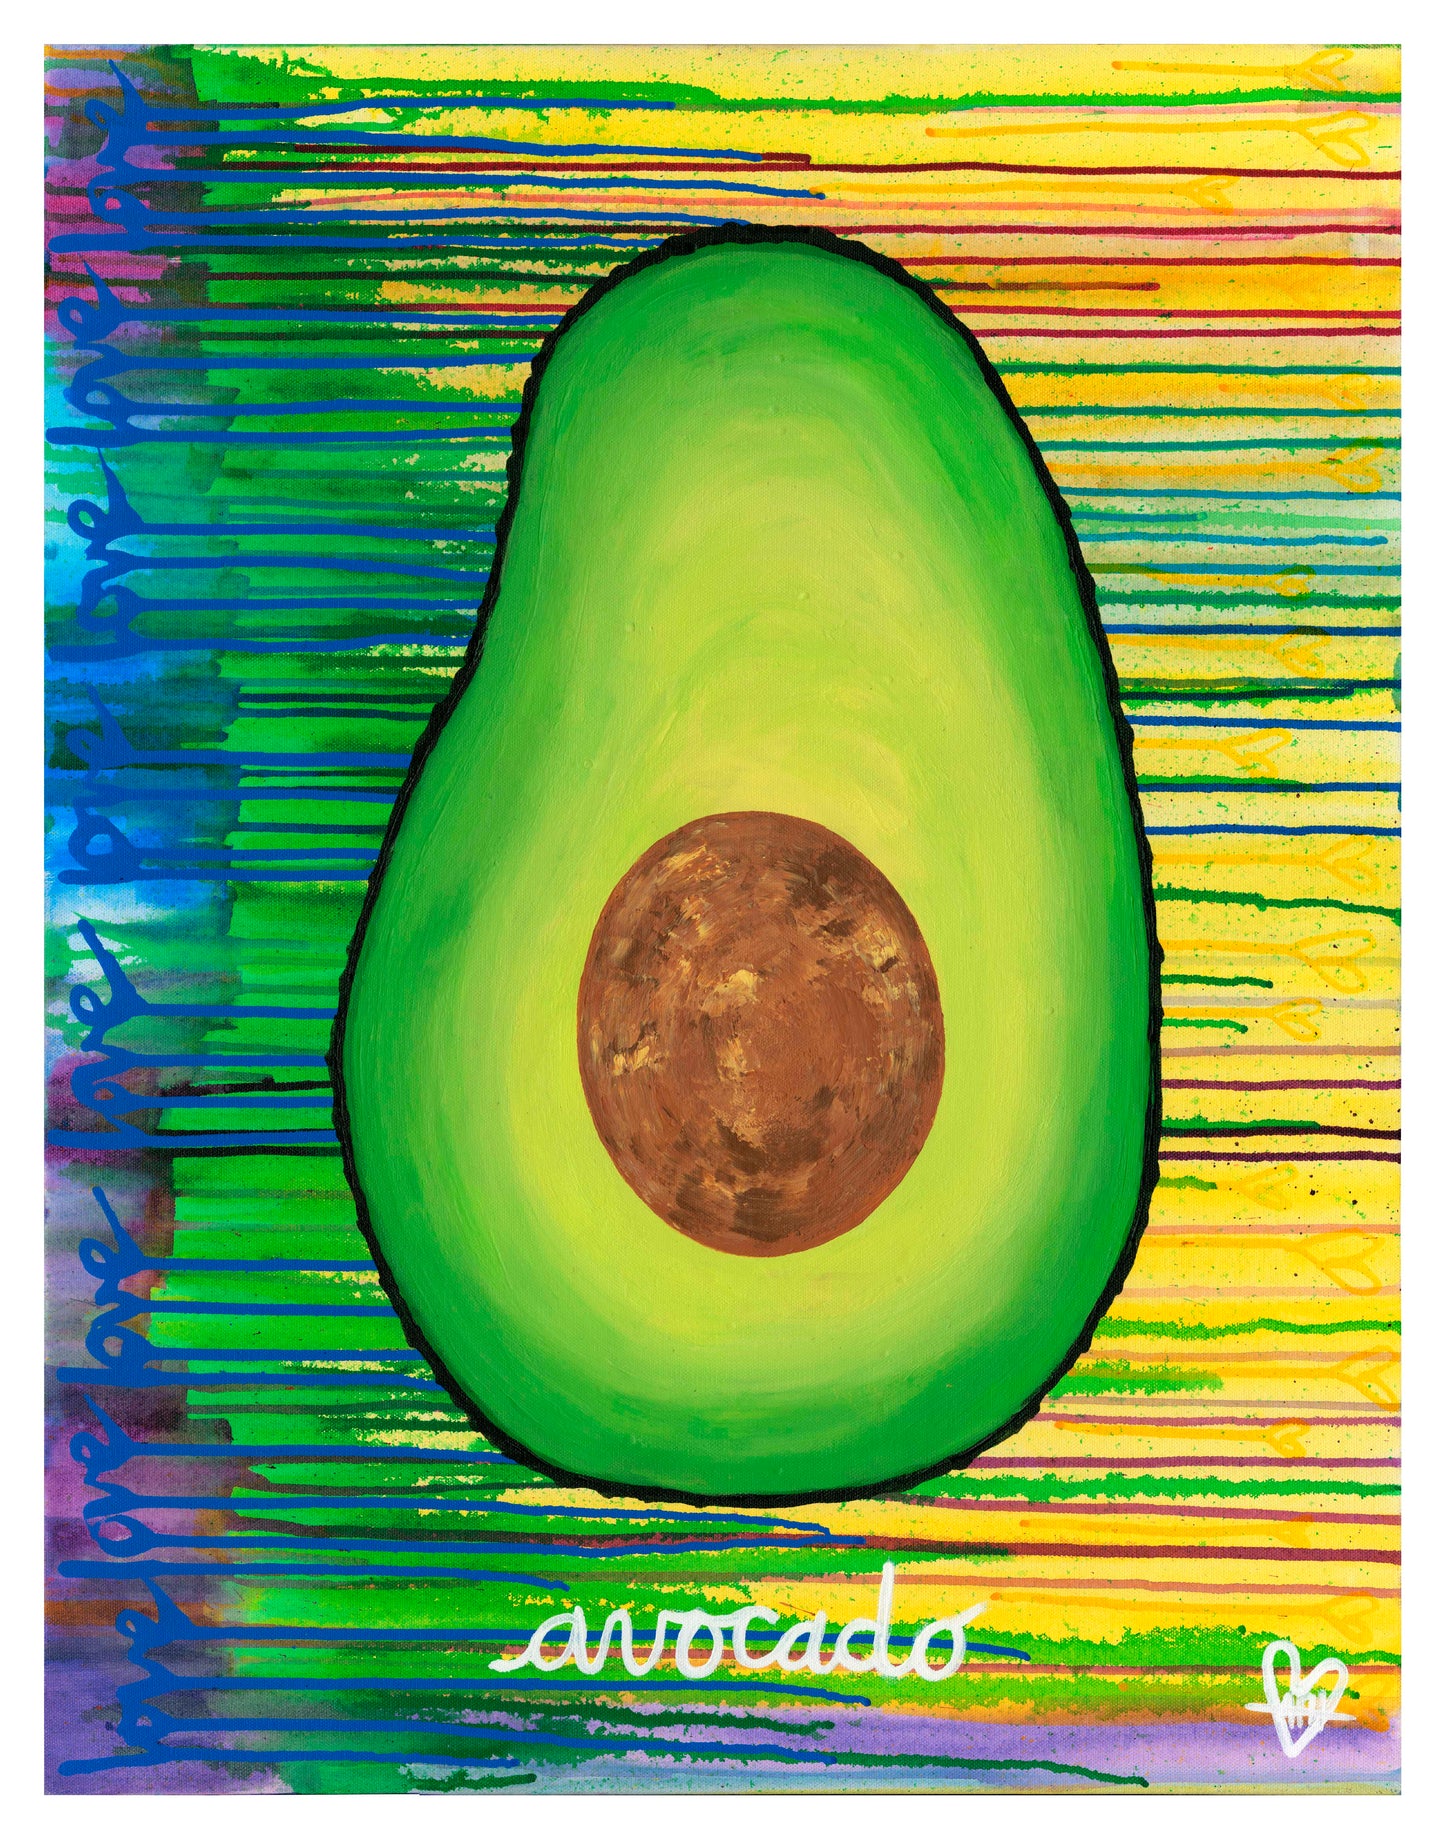 The Avocado One print